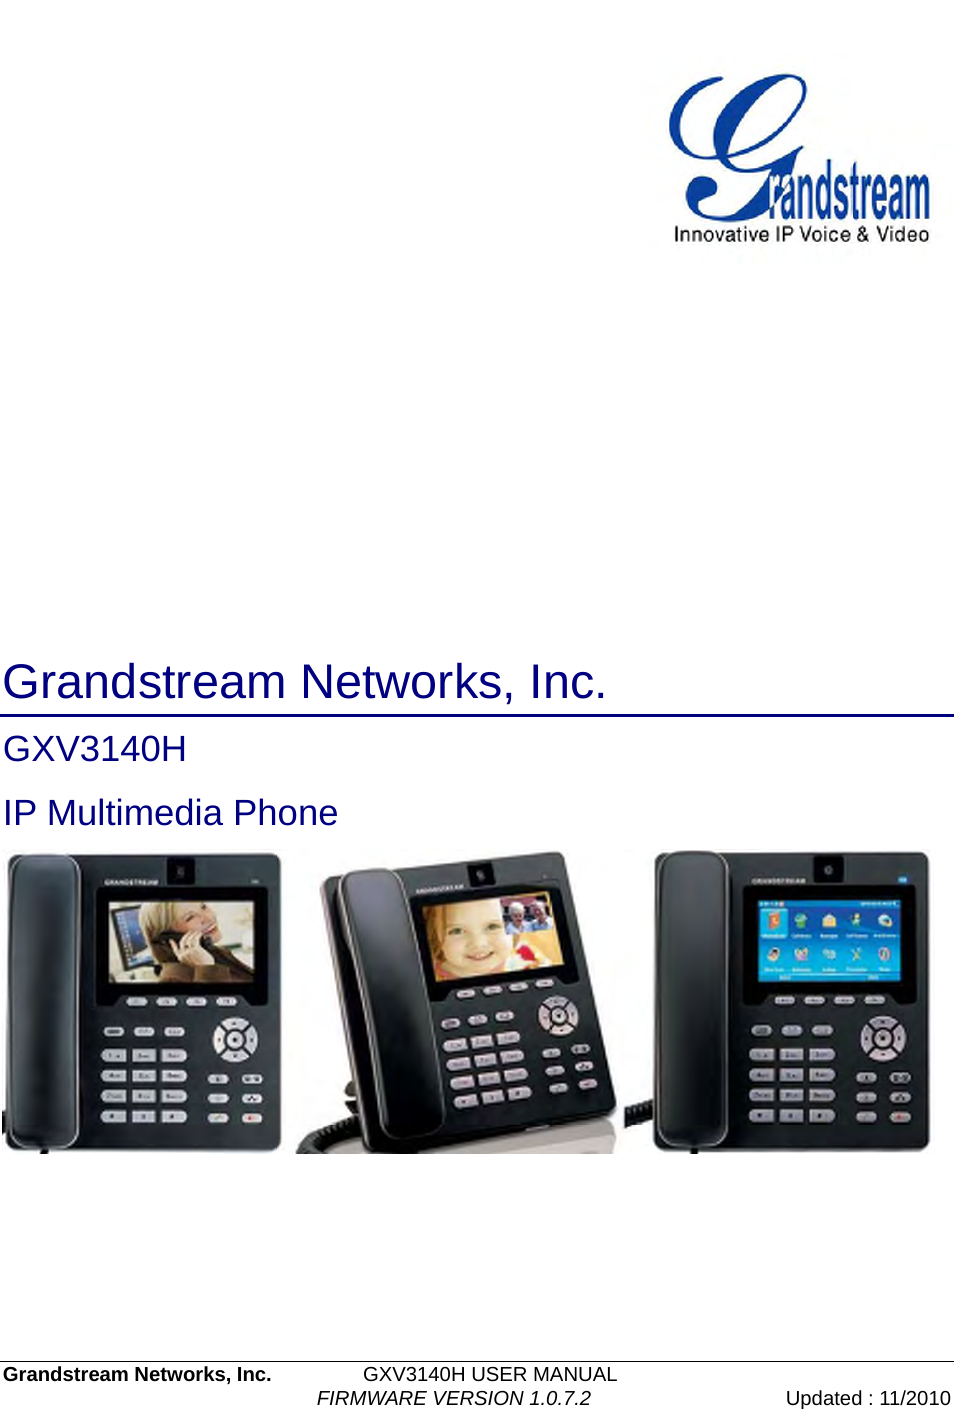   Grandstream Networks, Inc.         GXV3140H USER MANUAL                                  FIRMWARE VERSION 1.0.7.2 Updated : 11/2010                Grandstream Networks, Inc. GXV3140H  IP Multimedia Phone 